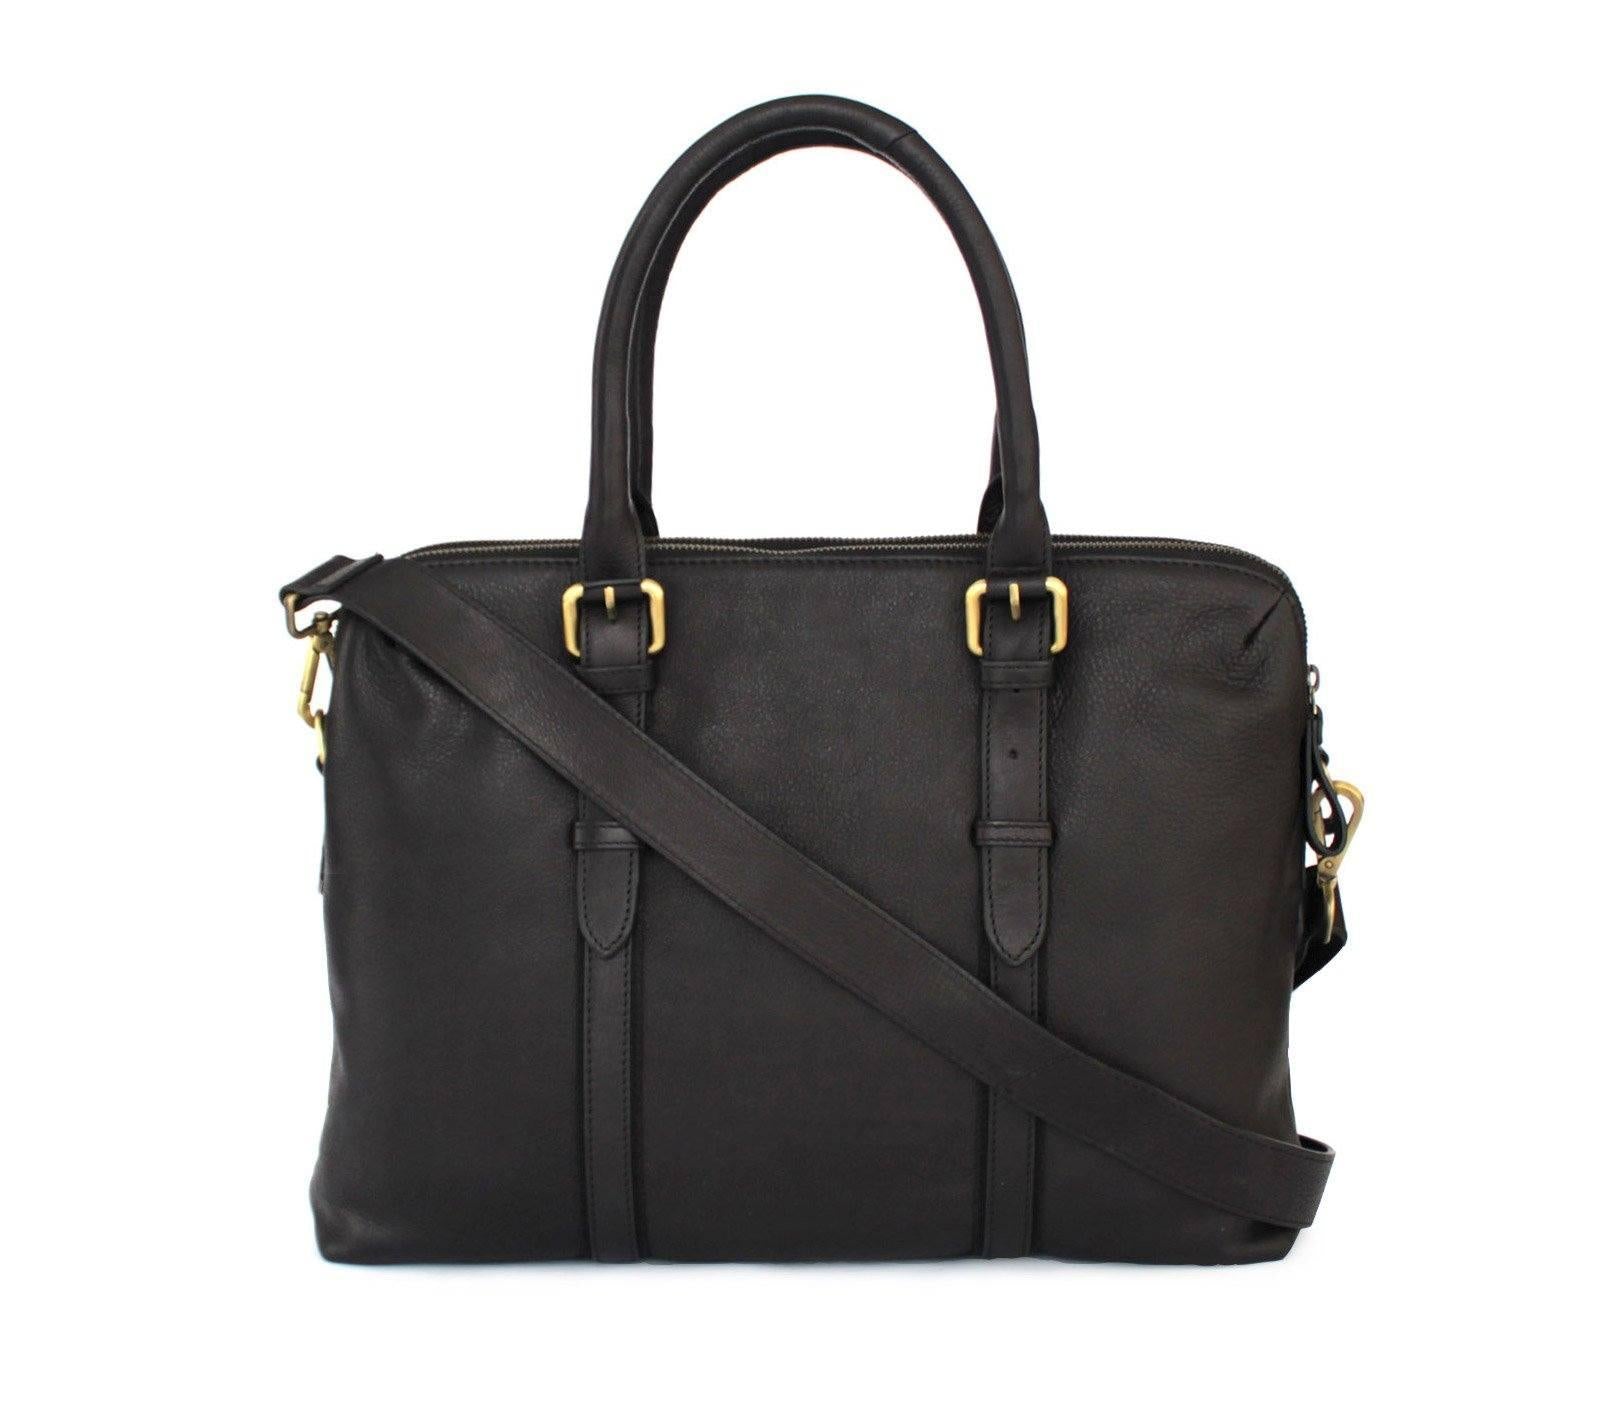 Buy Lavie Kaley Womens Large Laptop Handbag Black at Amazonin